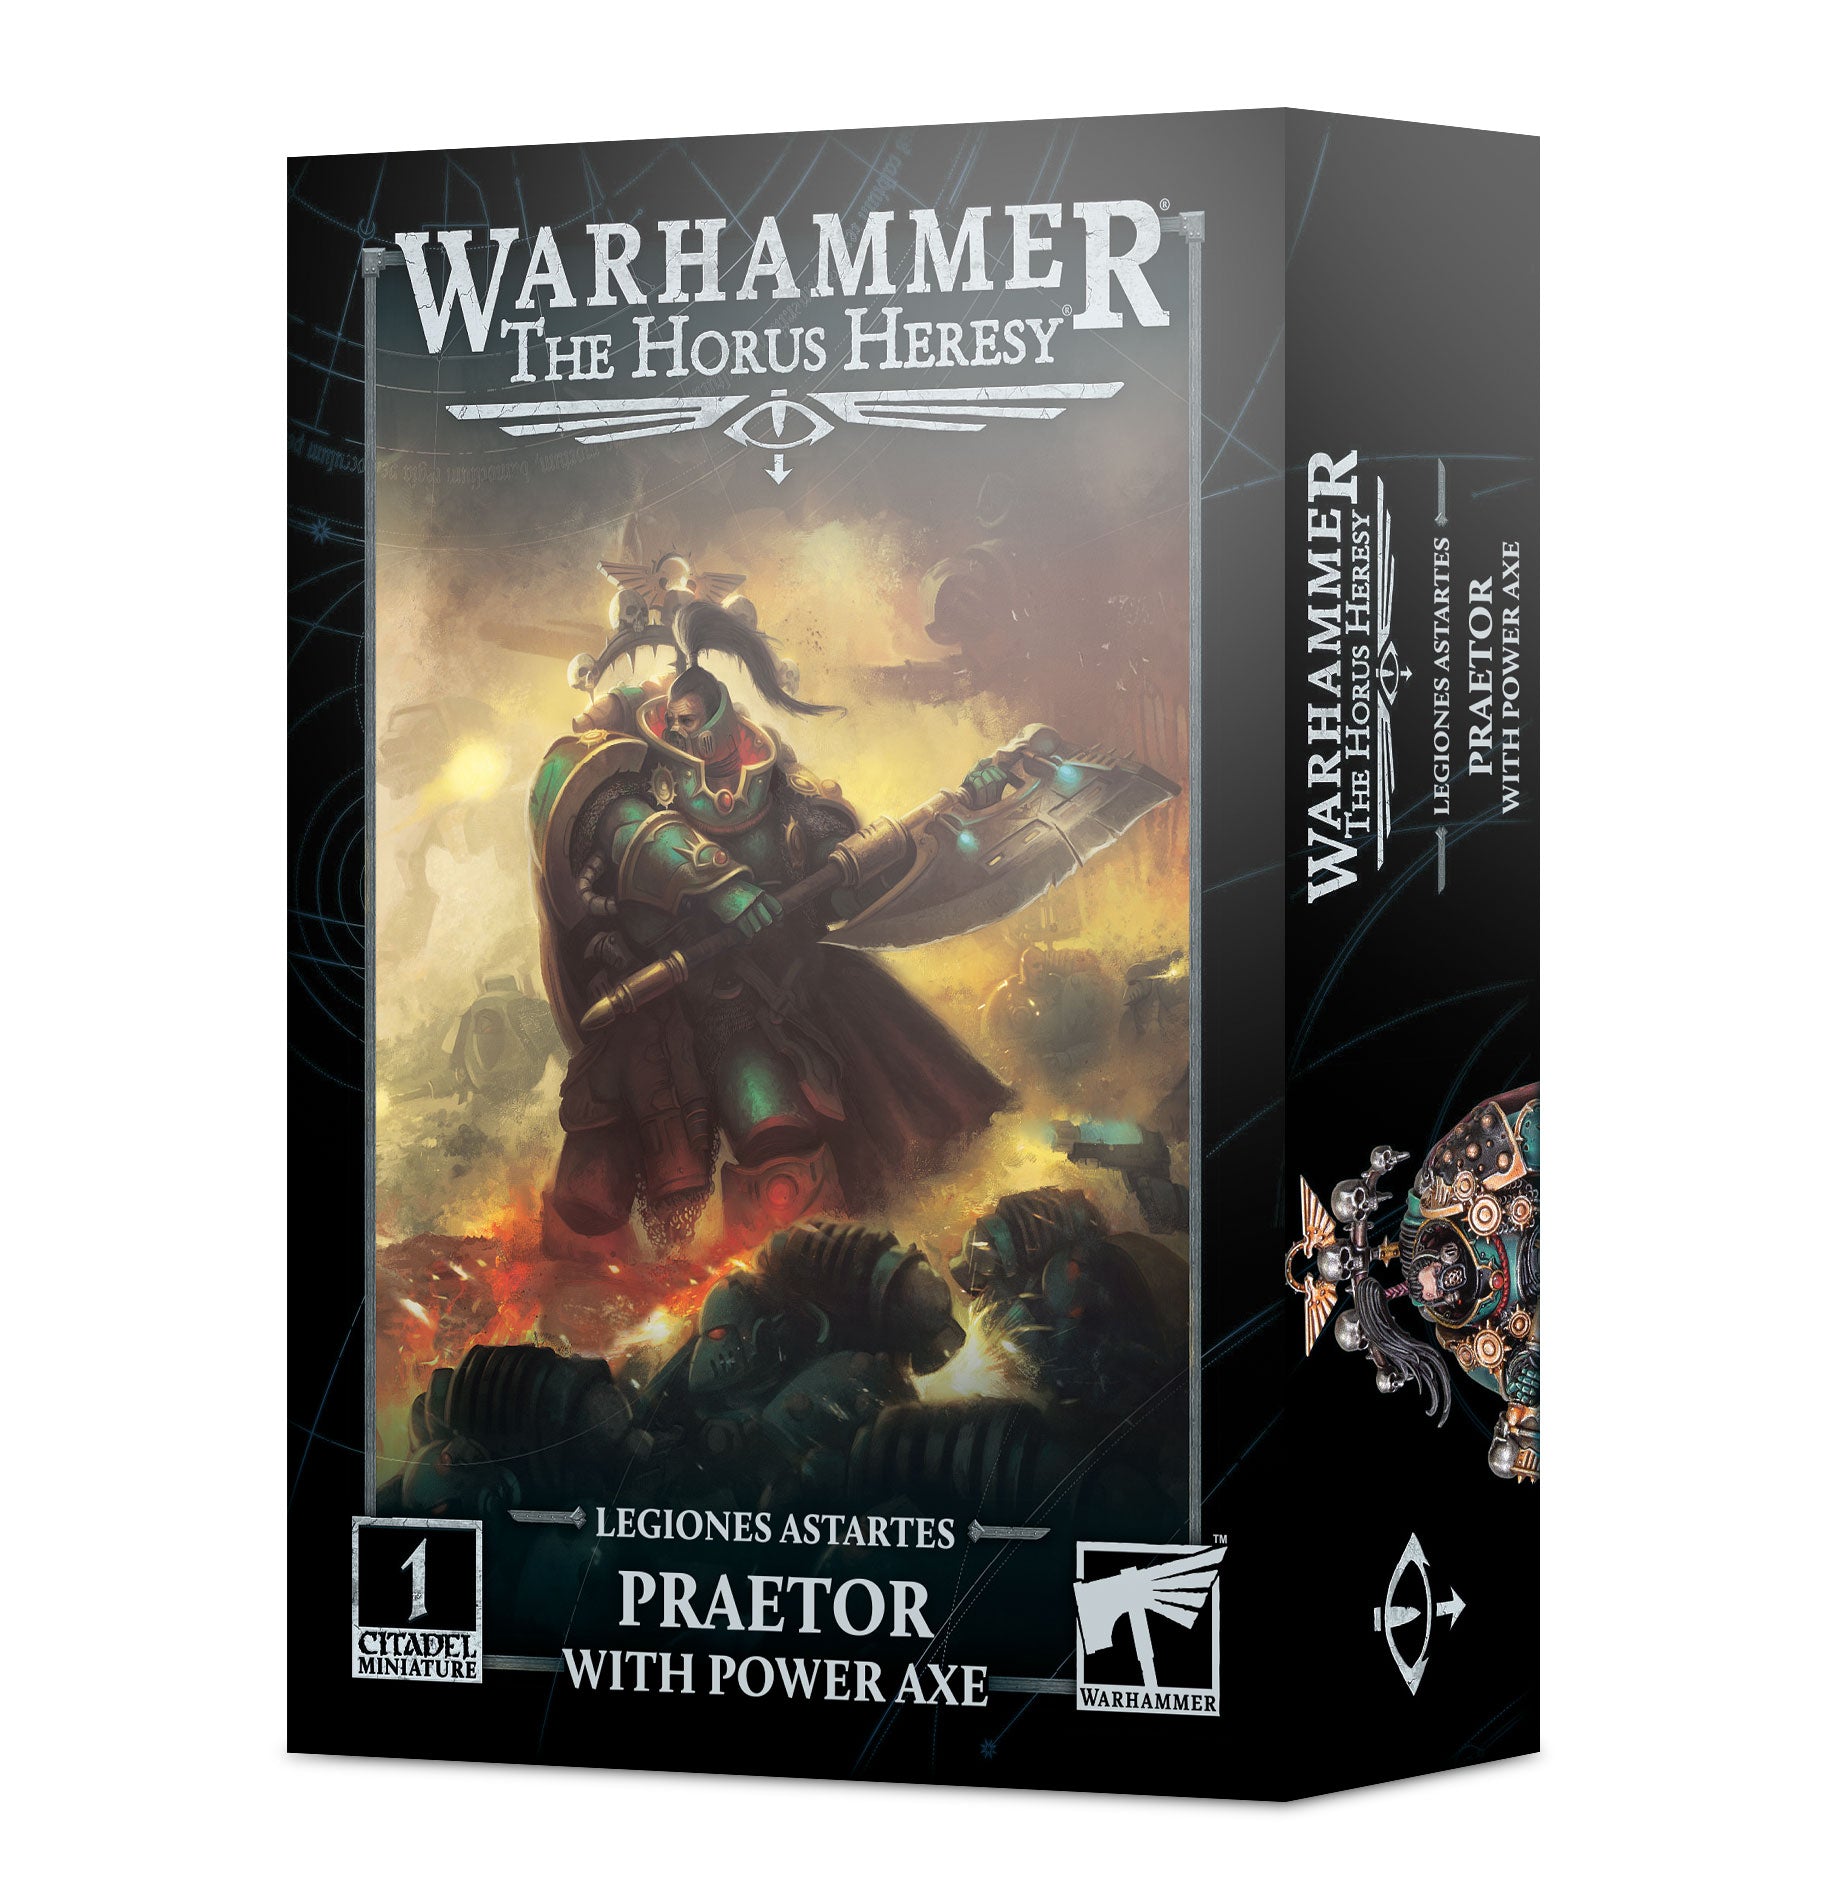 Warhammer Horus Heresy: Legiones Astartes Praetor With Power Axe